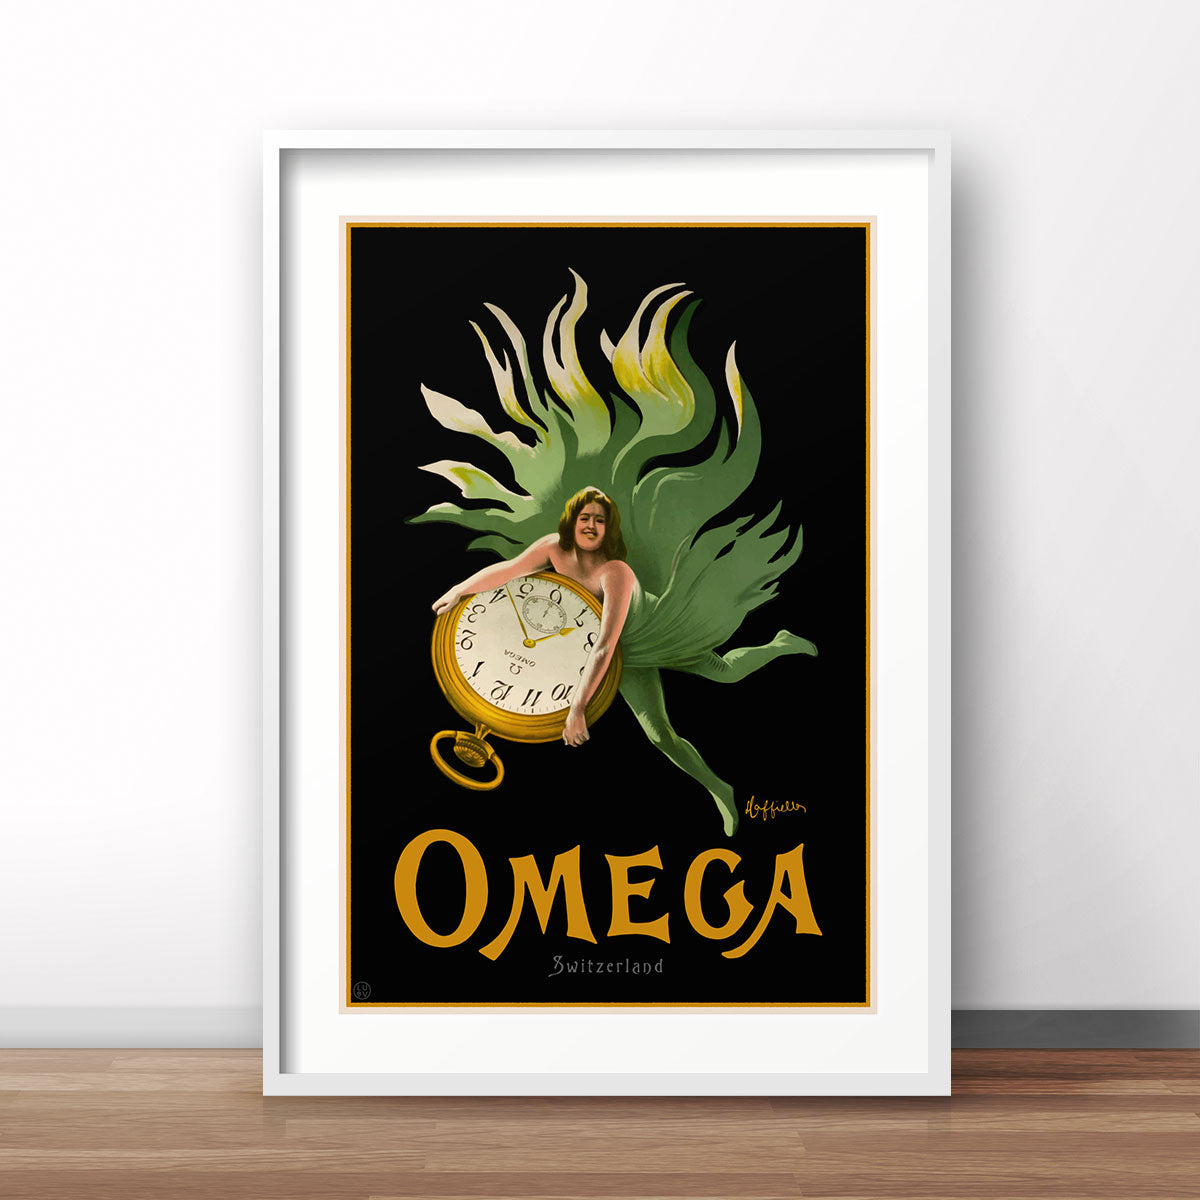 Omega Switzerland retro vintage advertising poster - Places We Luv